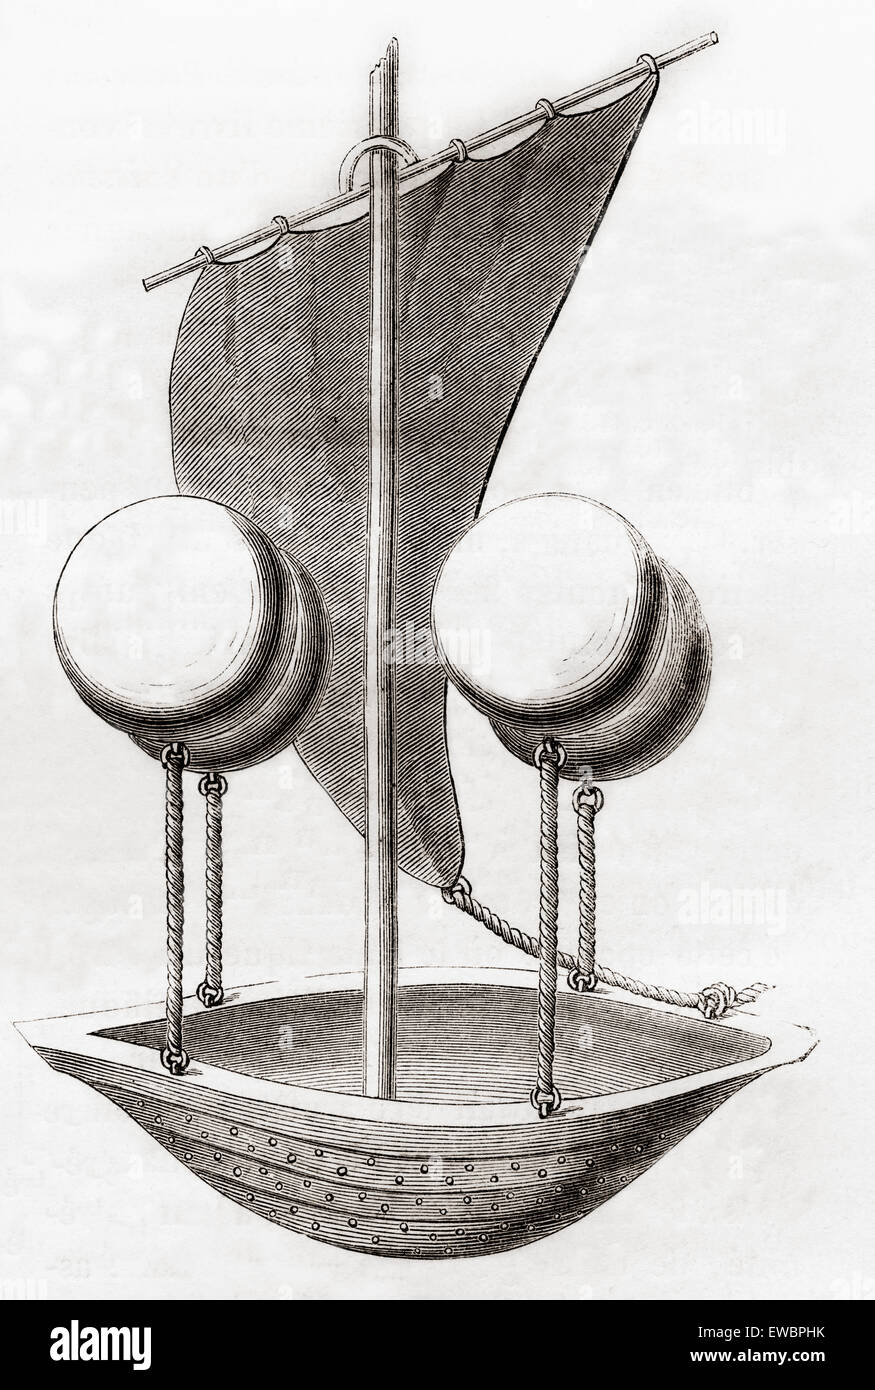 Francesco Lana de Terzi nel suo flying boat concetto c.1670. Francesco Lana de Terzi, 1631 - 1687. Gesuita italiano, Matematico, naturalista e aeronautica Pioneer. Foto Stock